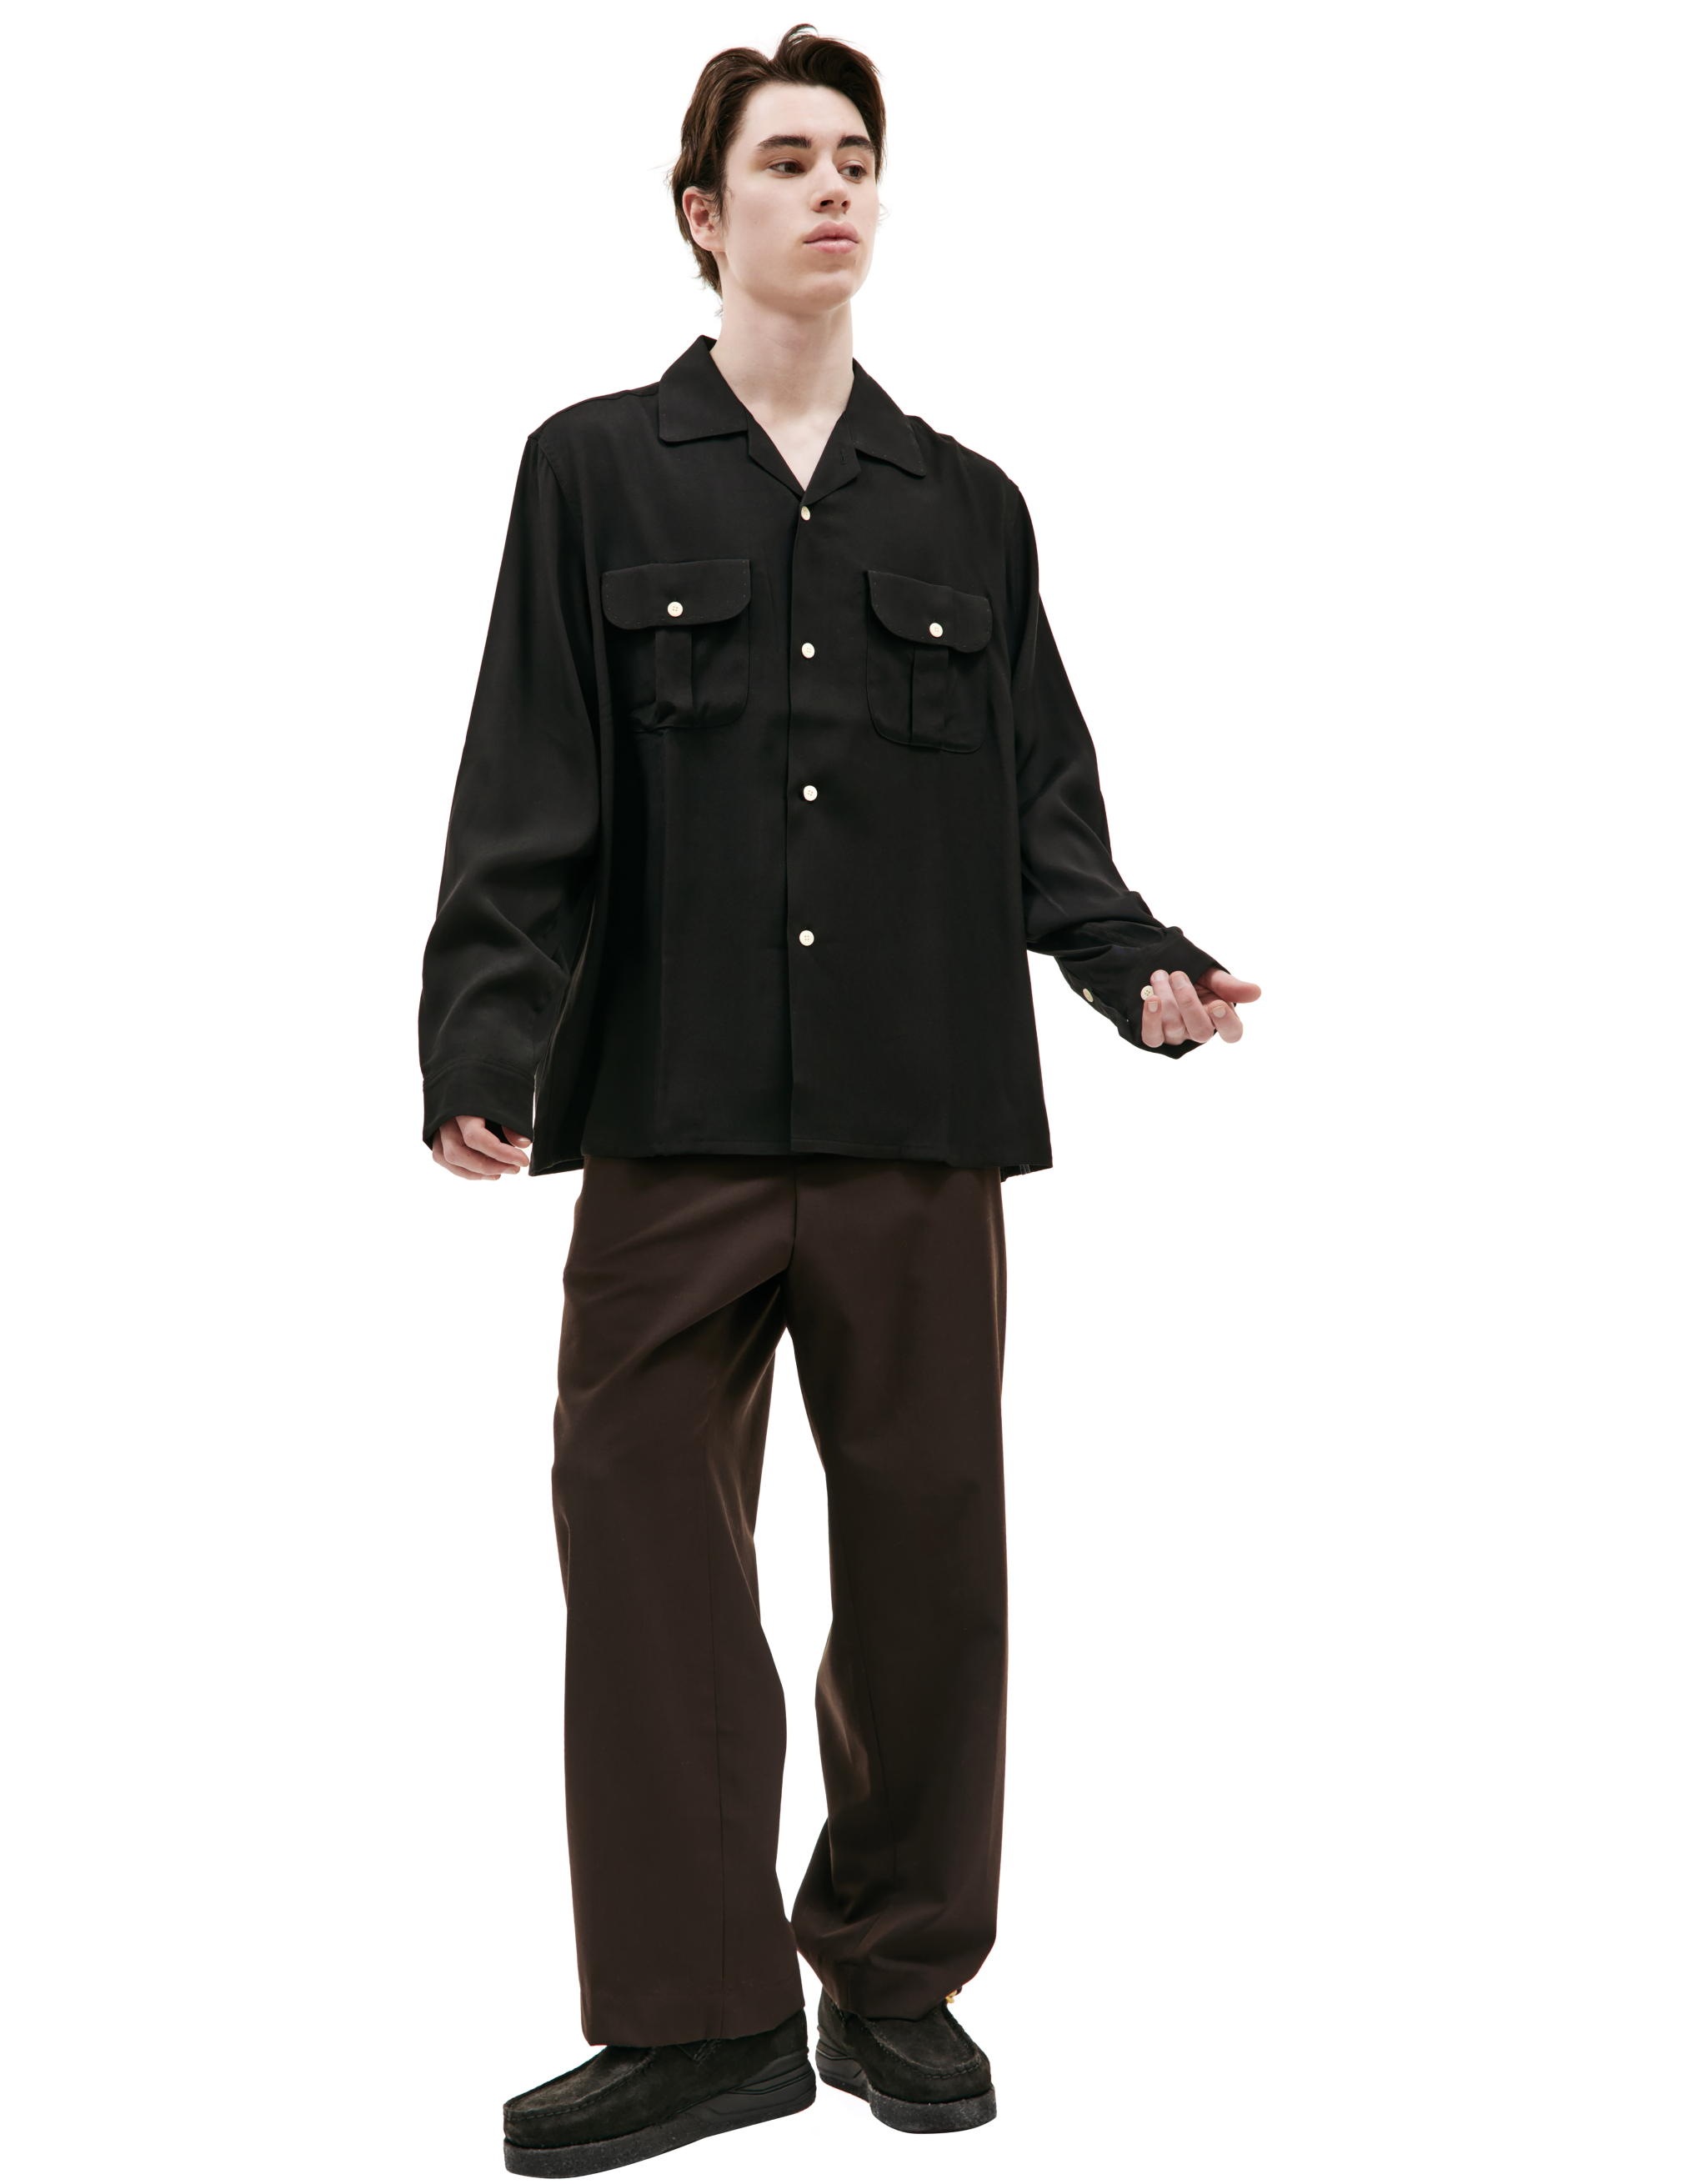 Рубашка Keesey G.S. с накладными карманами visvim 0124105011014, размер 4